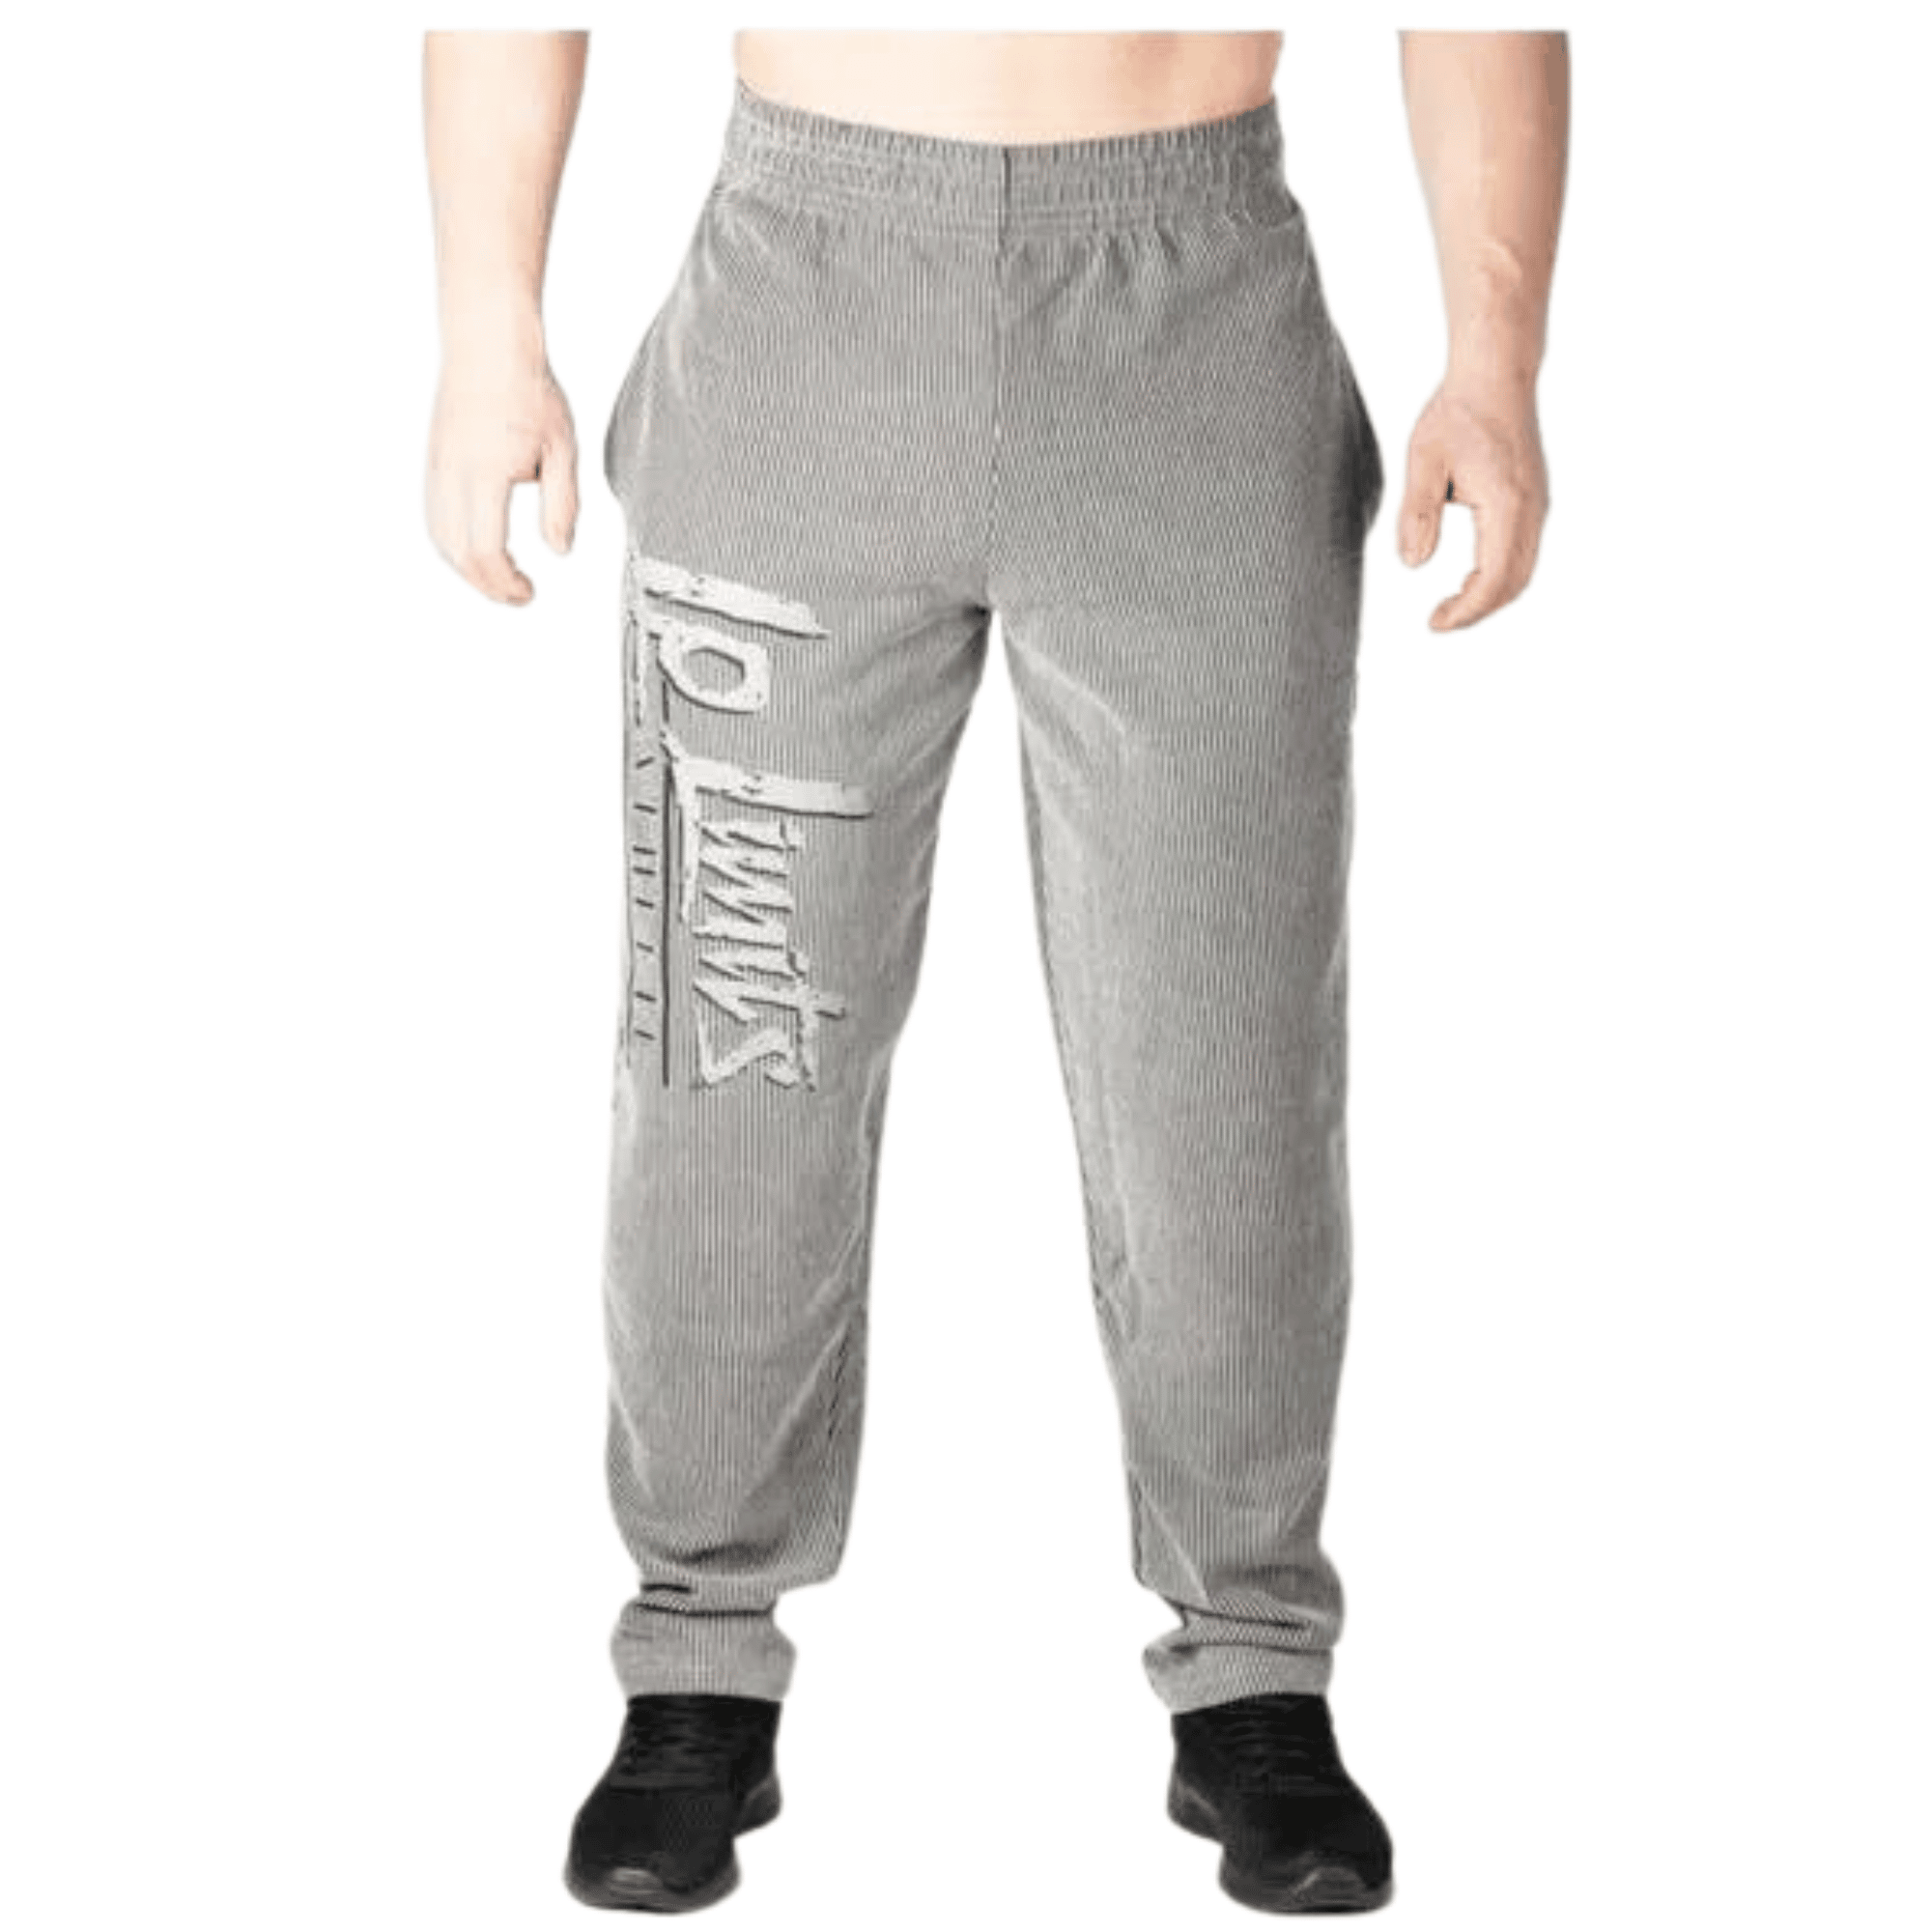 Legal Power Body Pants "MANOTTO" Grey 6202-952